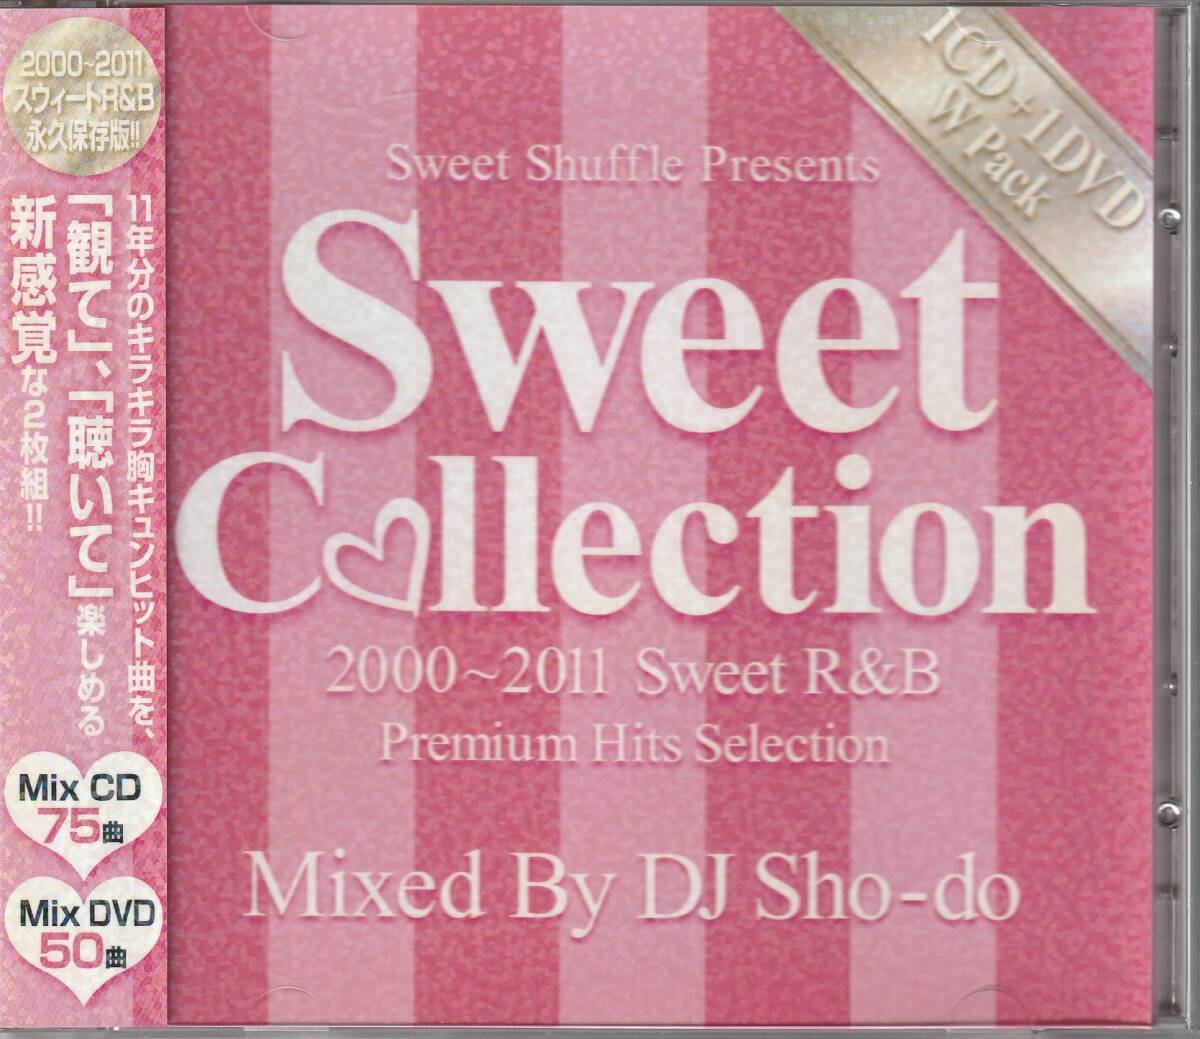 中古CD■R&B■MIX CD & MIX DVD／DJ SHO-DO／Sweet Collection 2000~2011■DJ KOMORI, DJ HASEBE, MAKI THE MAGIC, MIKE-MASA, DJ HAL_画像1